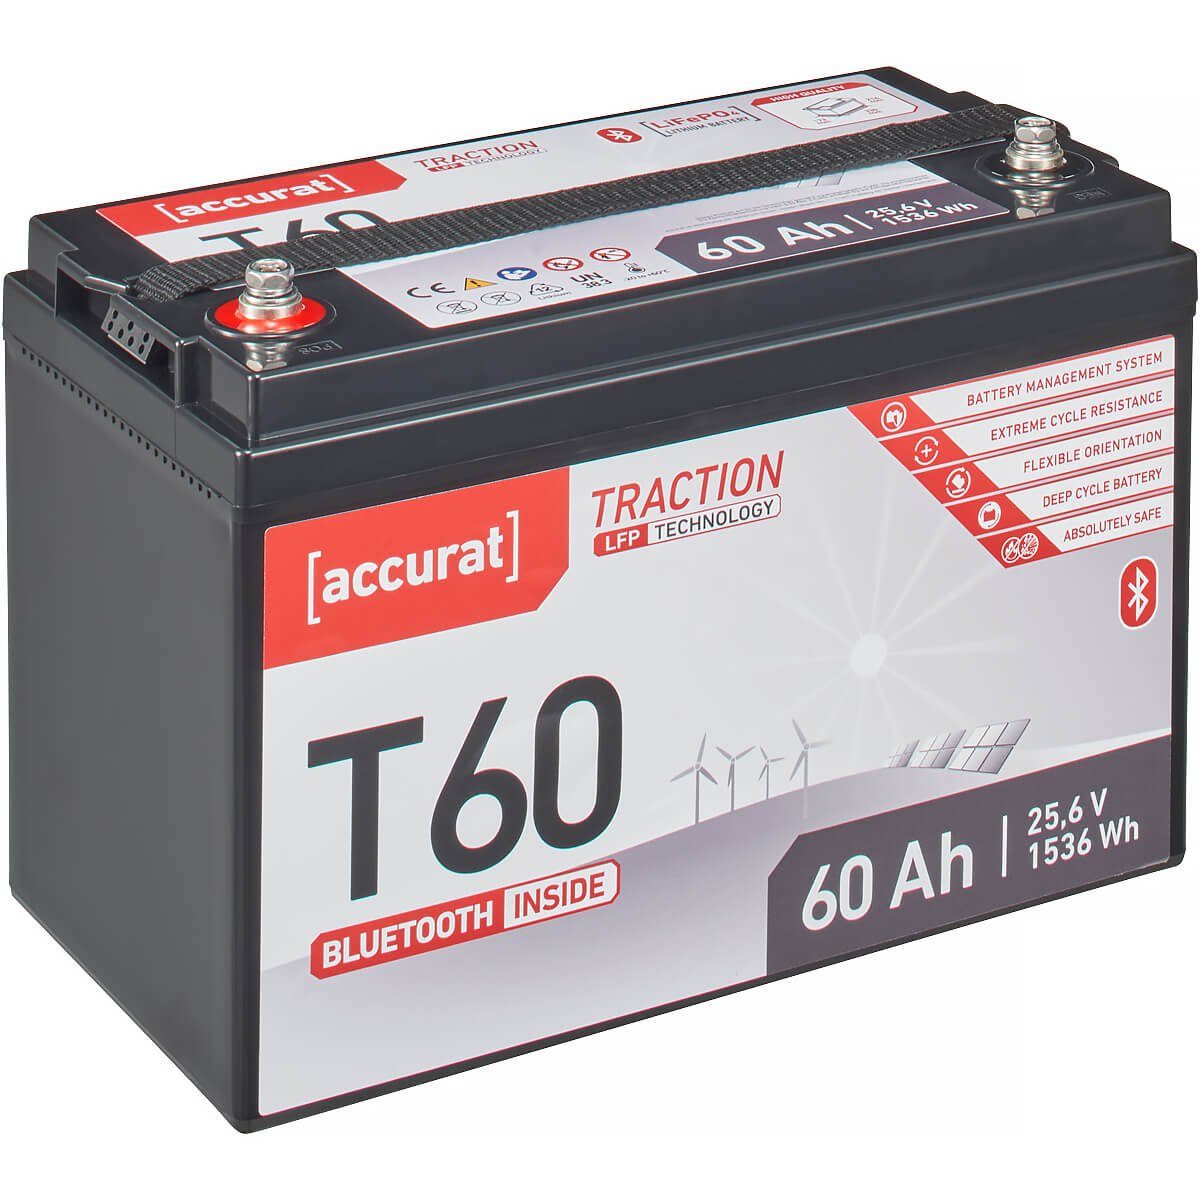 accurat Accurat Traction T60 LFP BT 24V LiFePO4 Lithium 60Ah Batterie, (24 V V)